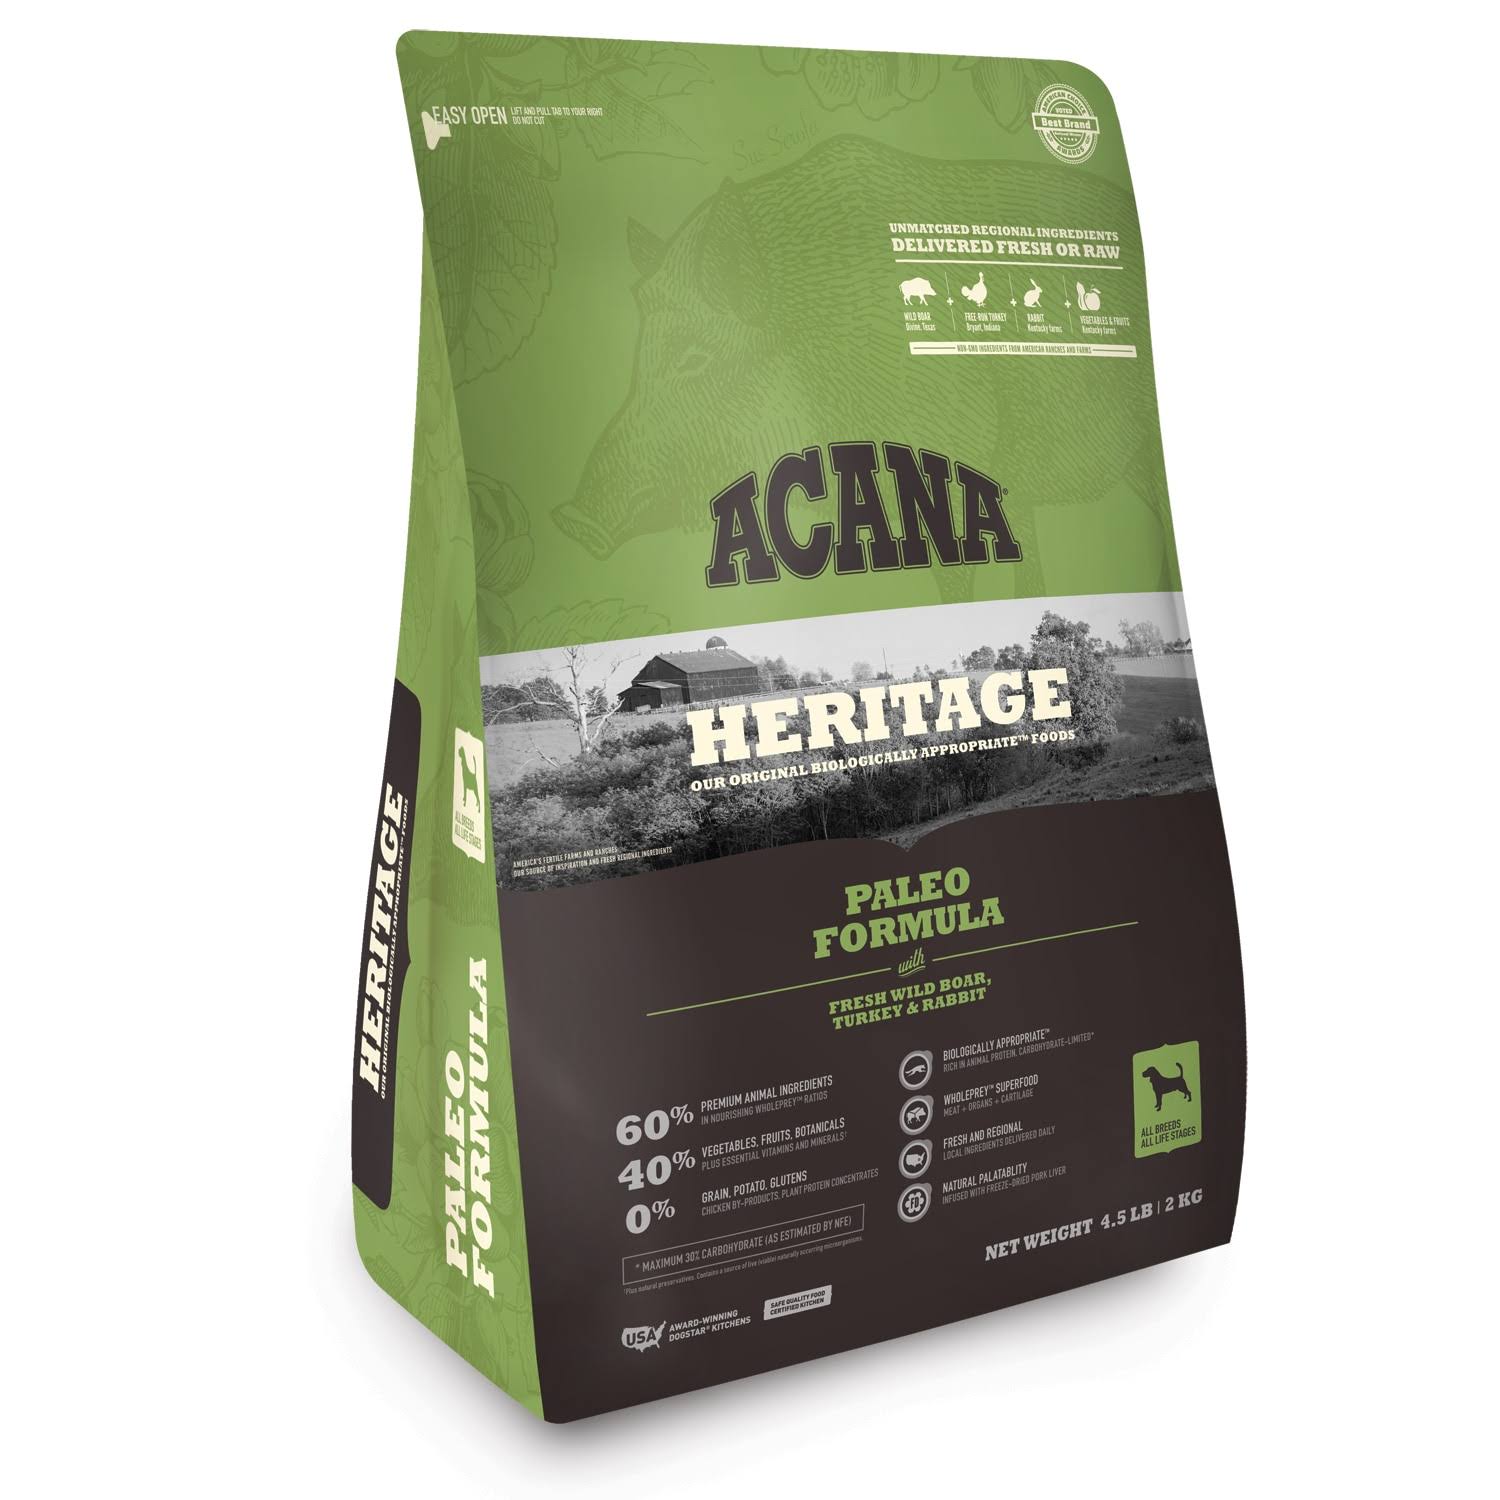 ACANA Heritage Paleo Formula Dry Dog Food 4.5-Lb.